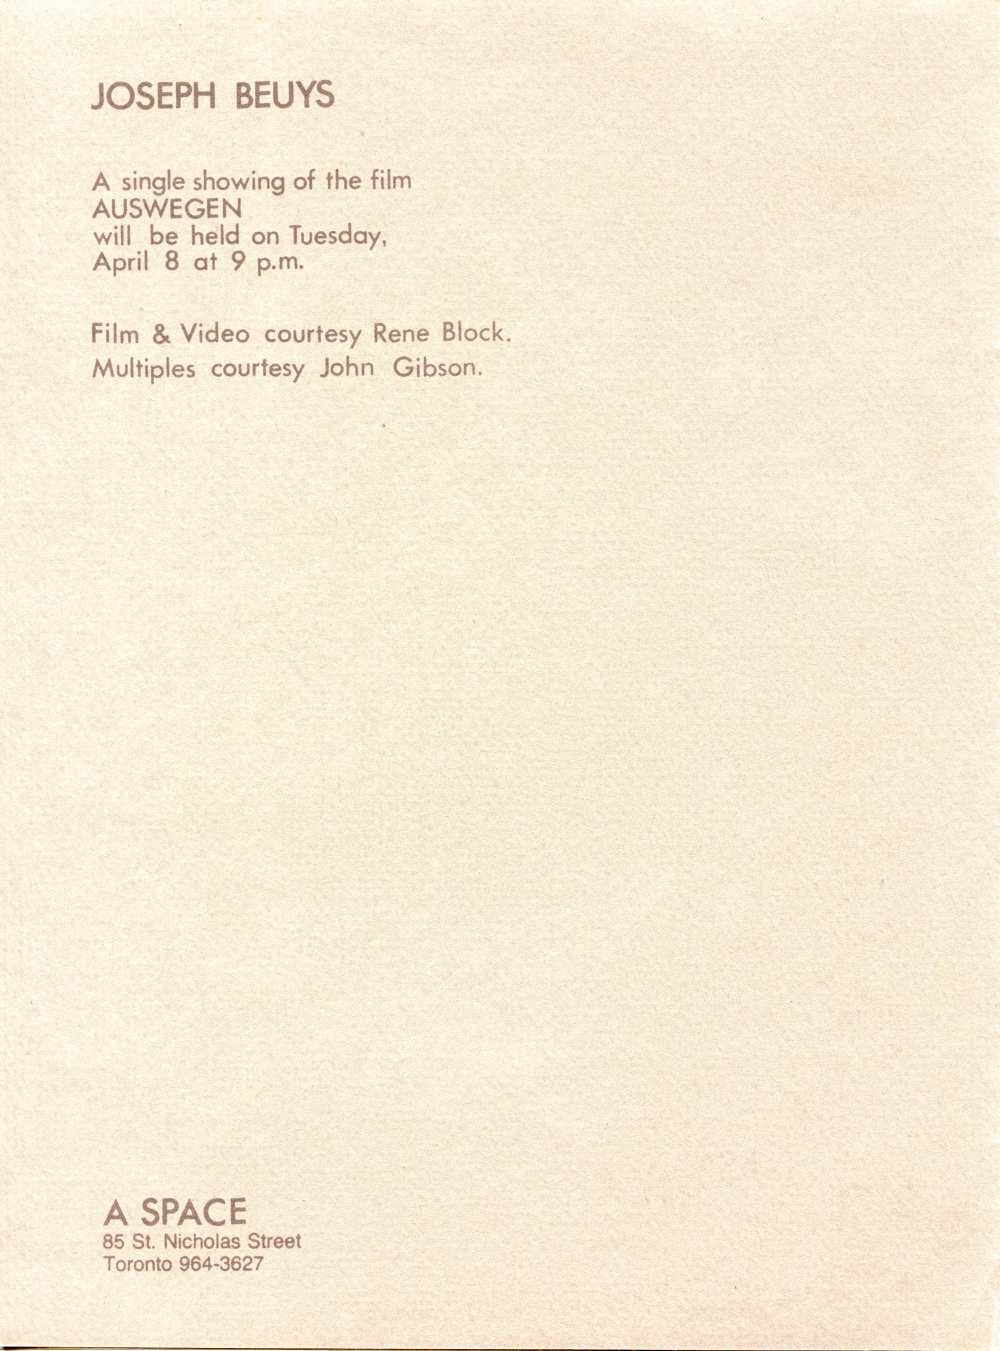 Joseph Beuys “Auswegen“ Invitation - interior